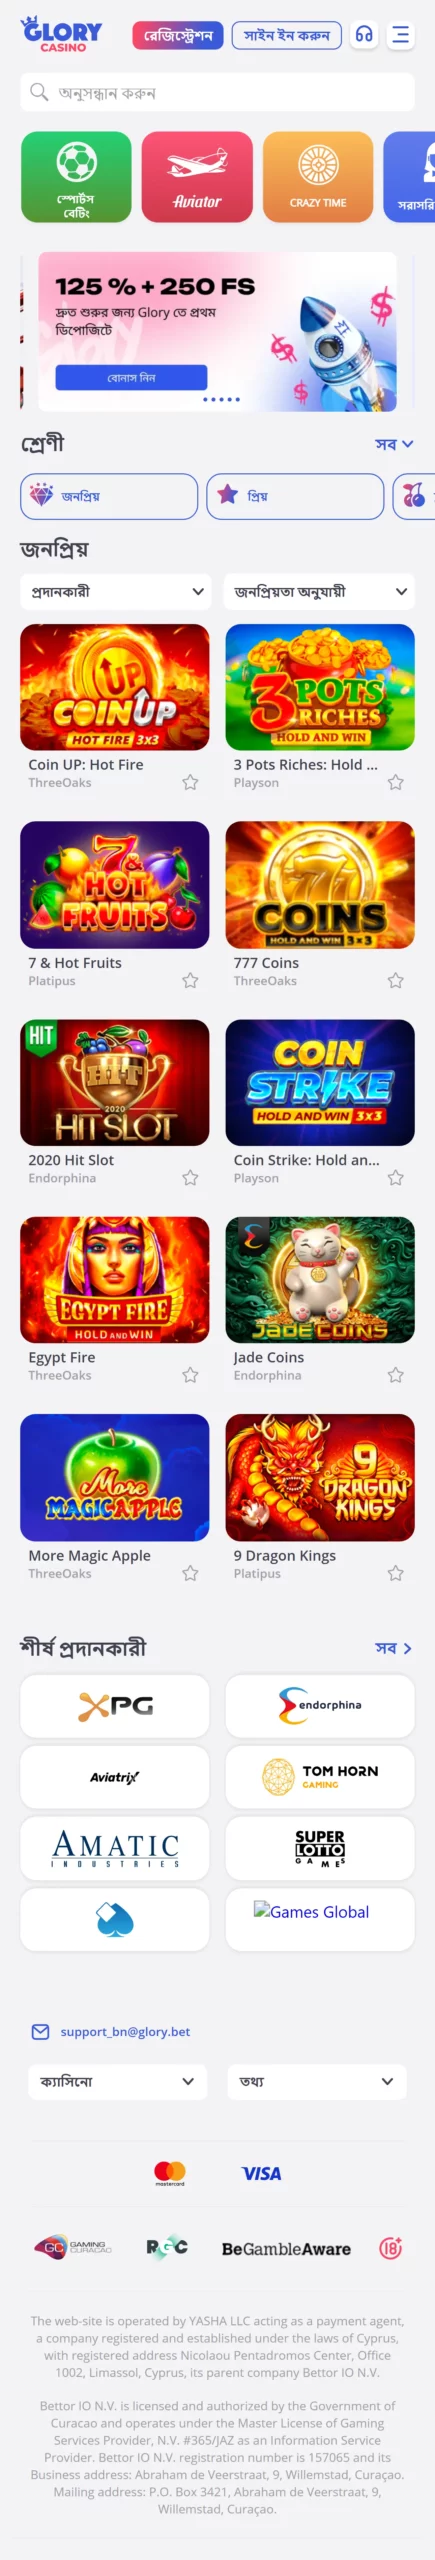 glory casino bangladesh app download